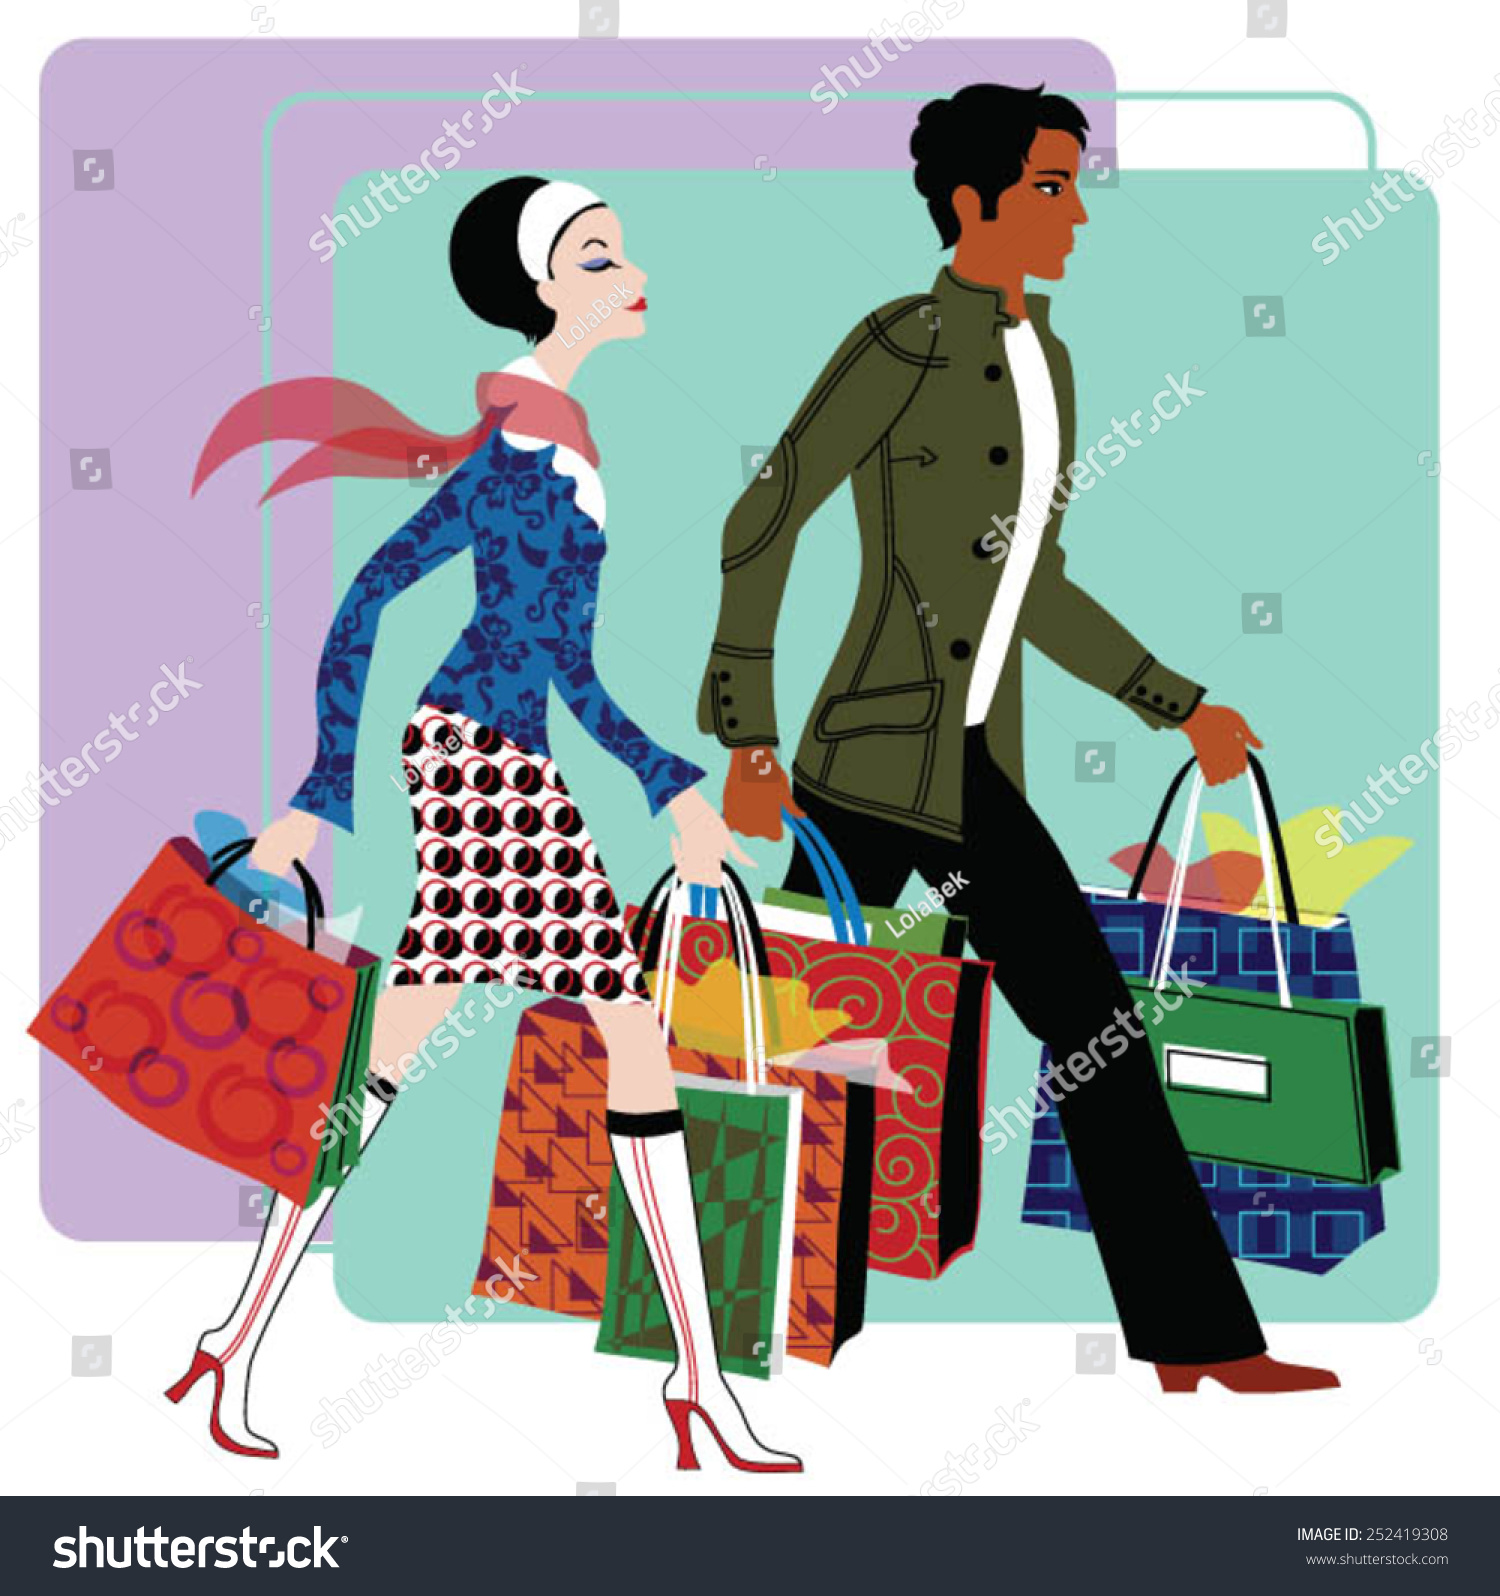 Lets go shopping. Woman go man go